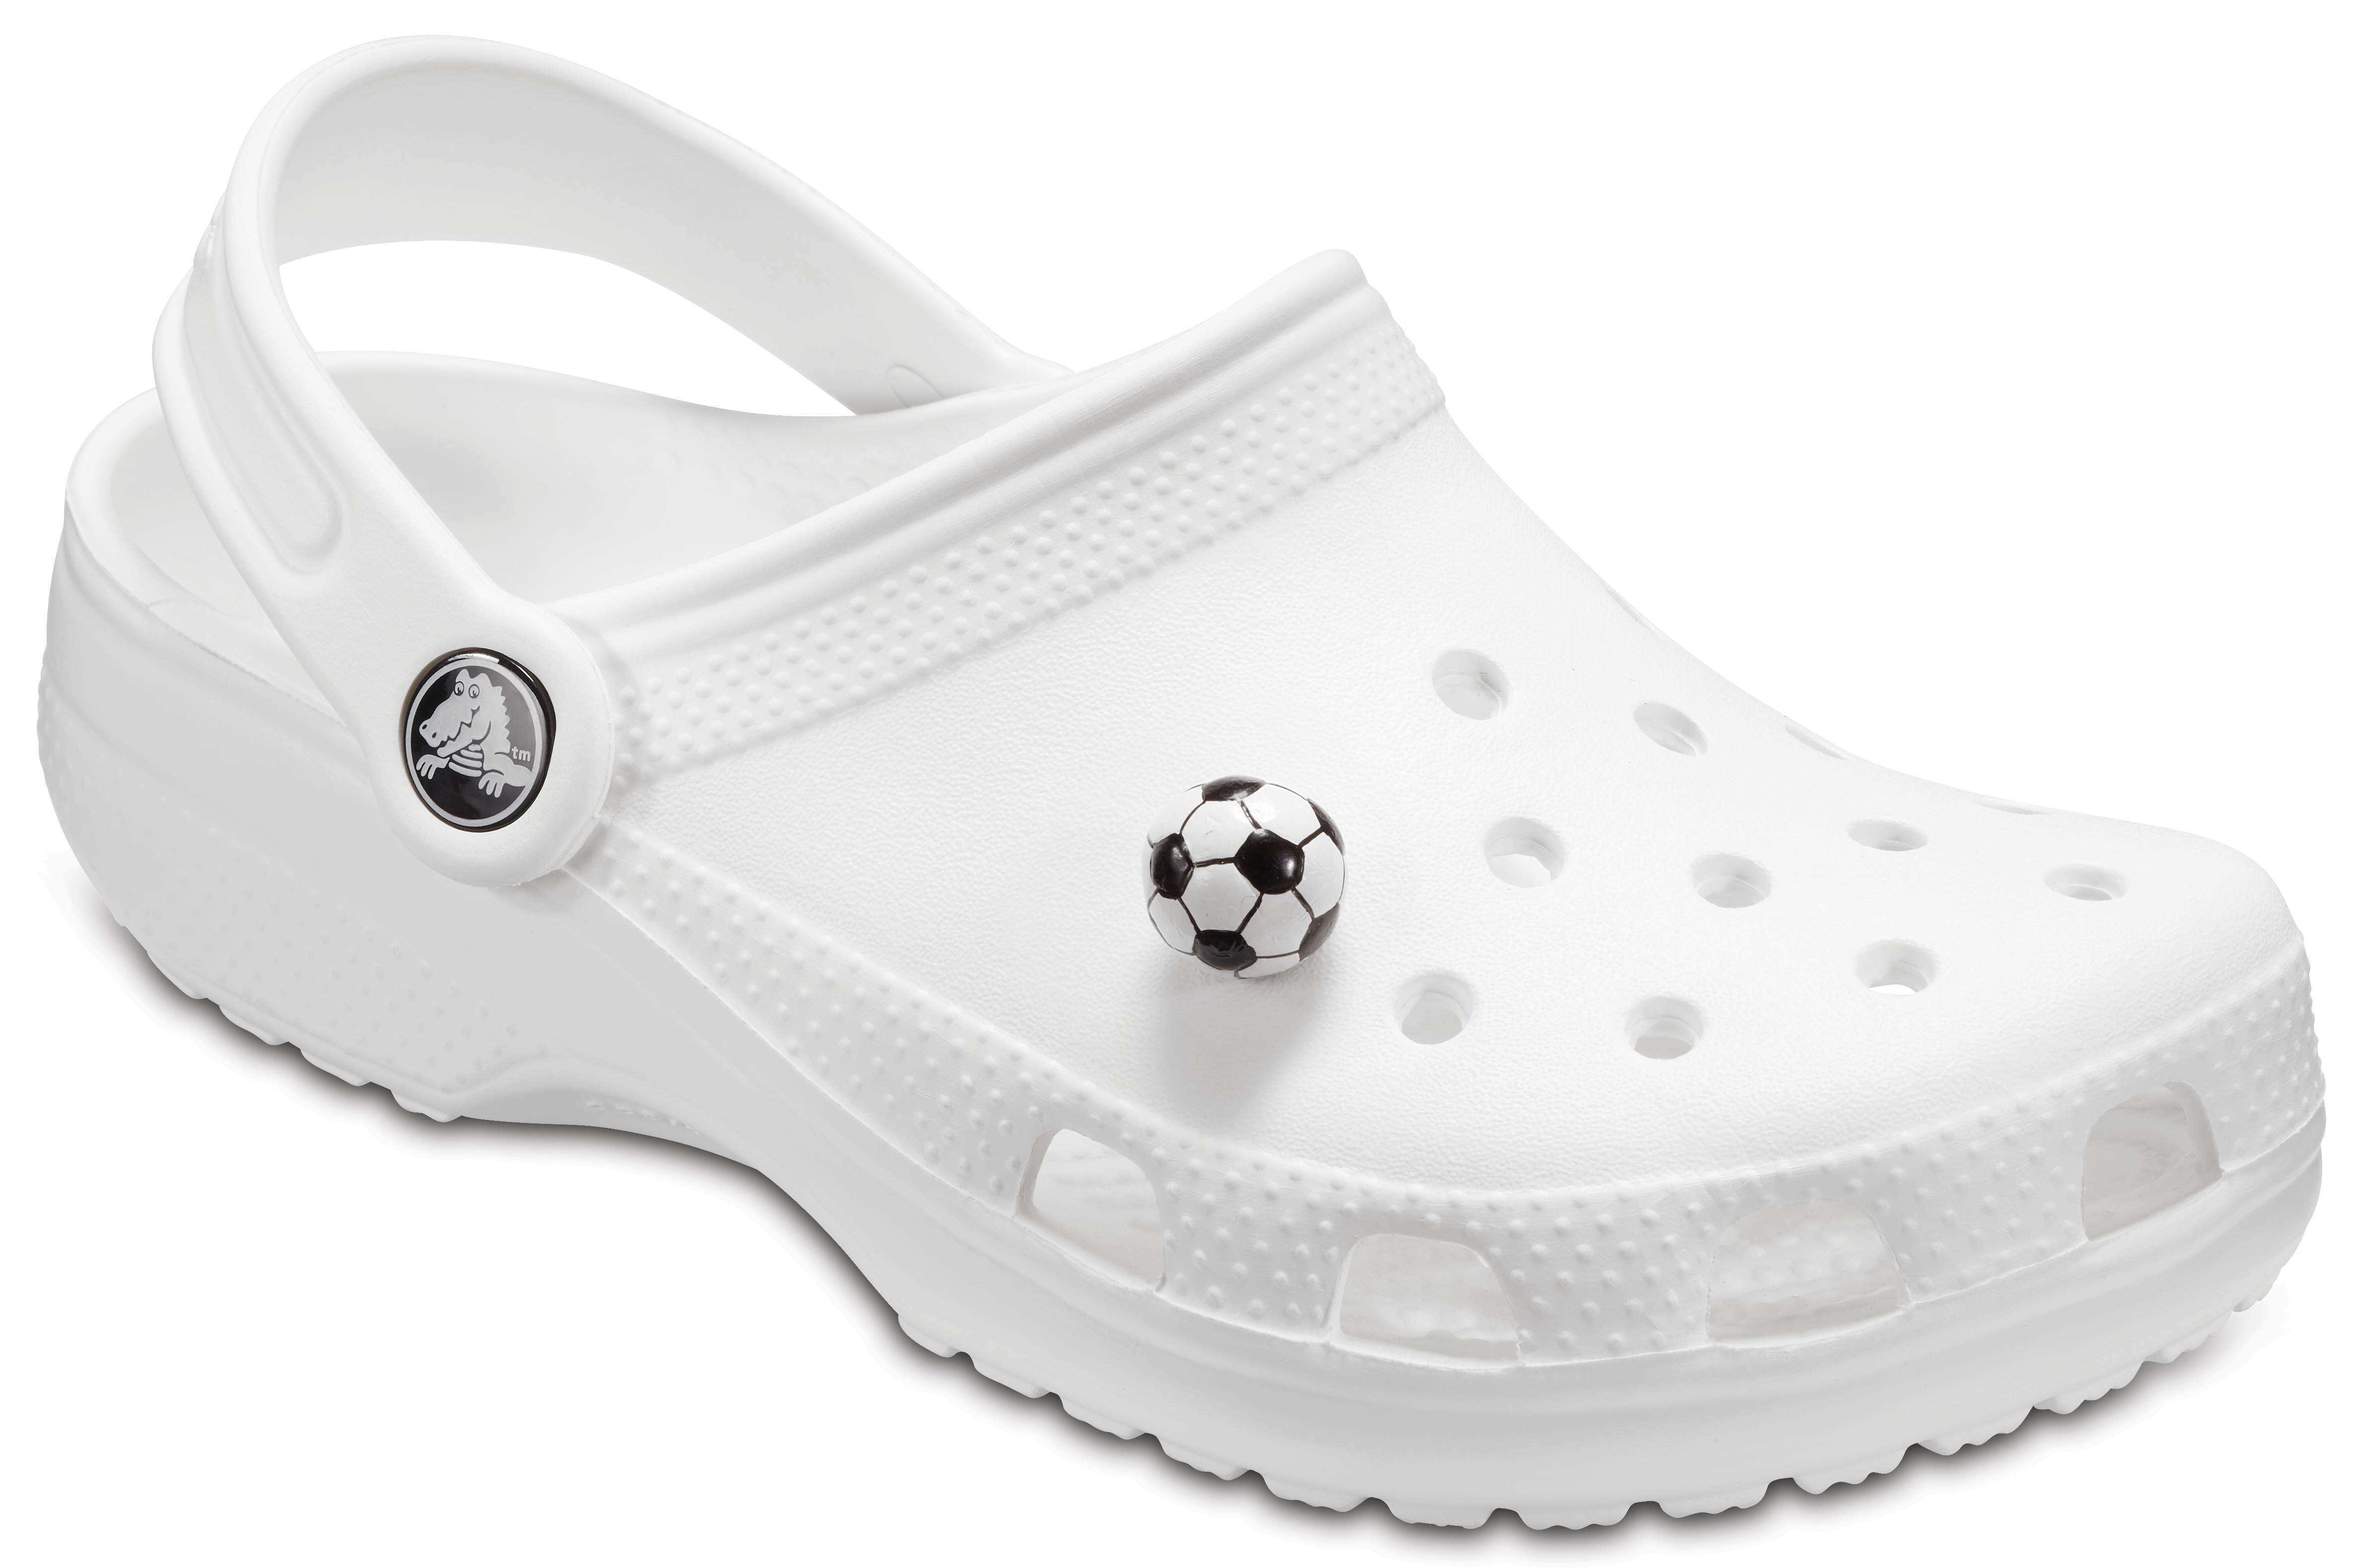 soccer croc charms